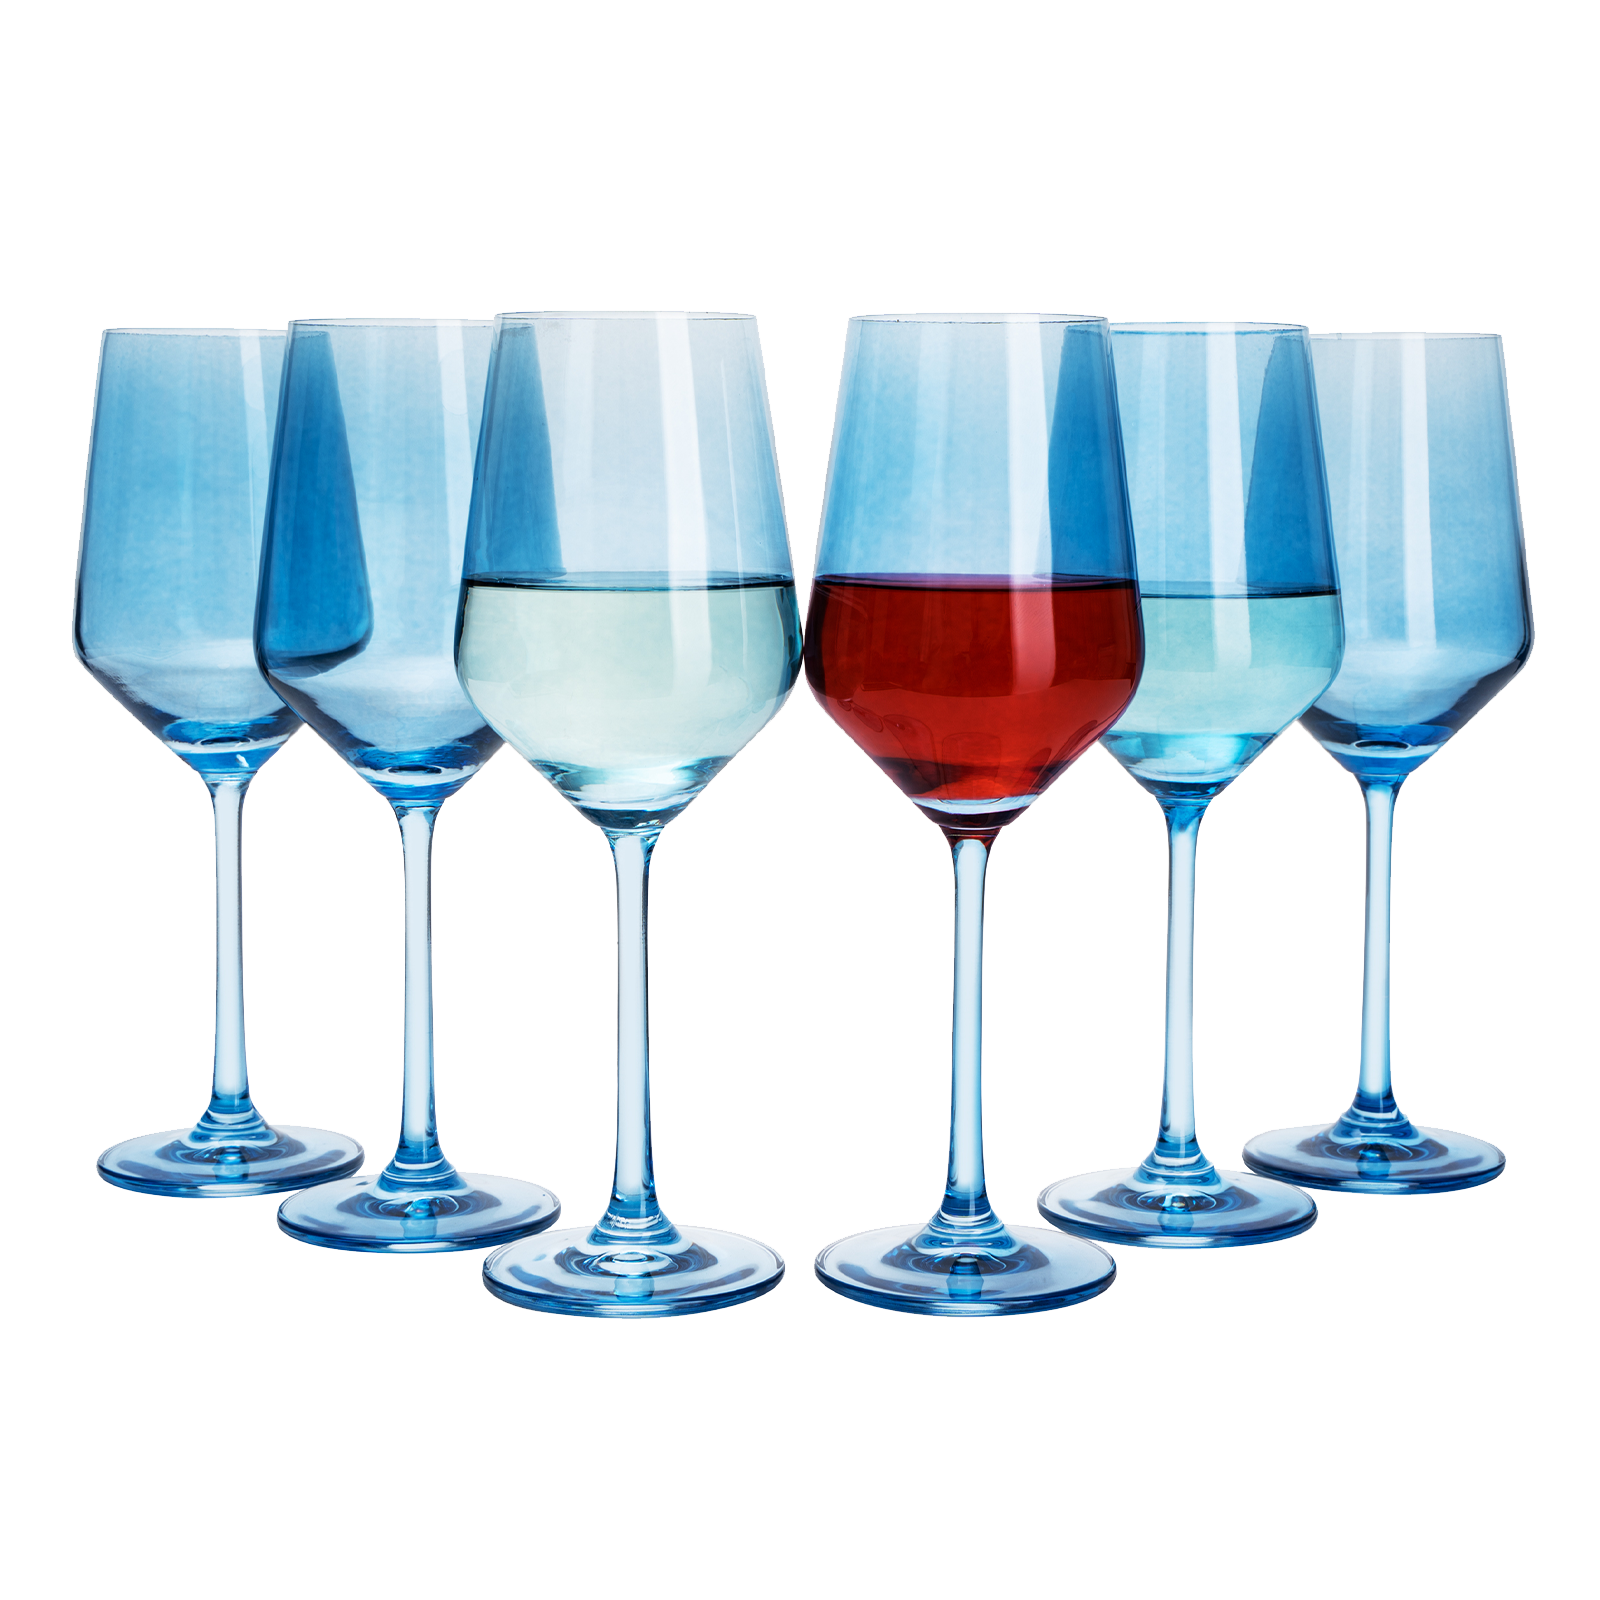 Juliet Midnight Blue Wine Glasses